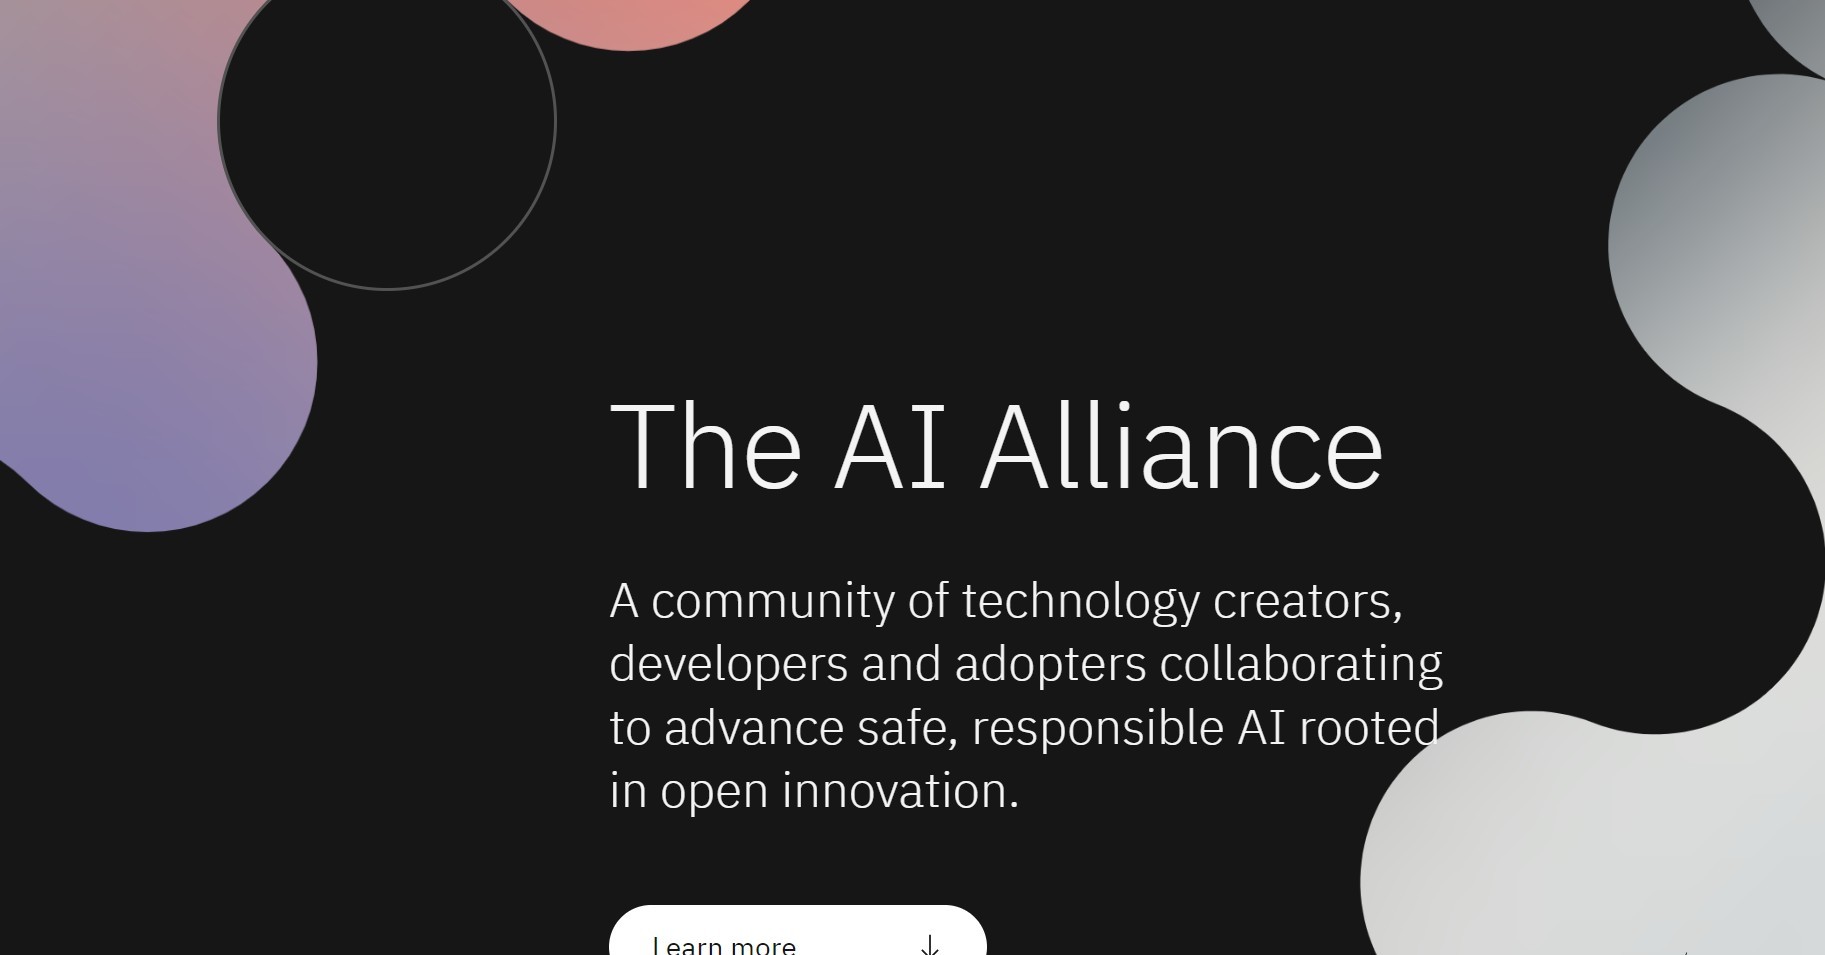 IBMとMeta、50以上の組織と「AI Alliance」結成　OpenAI、Microsoft、Googleは参加せず